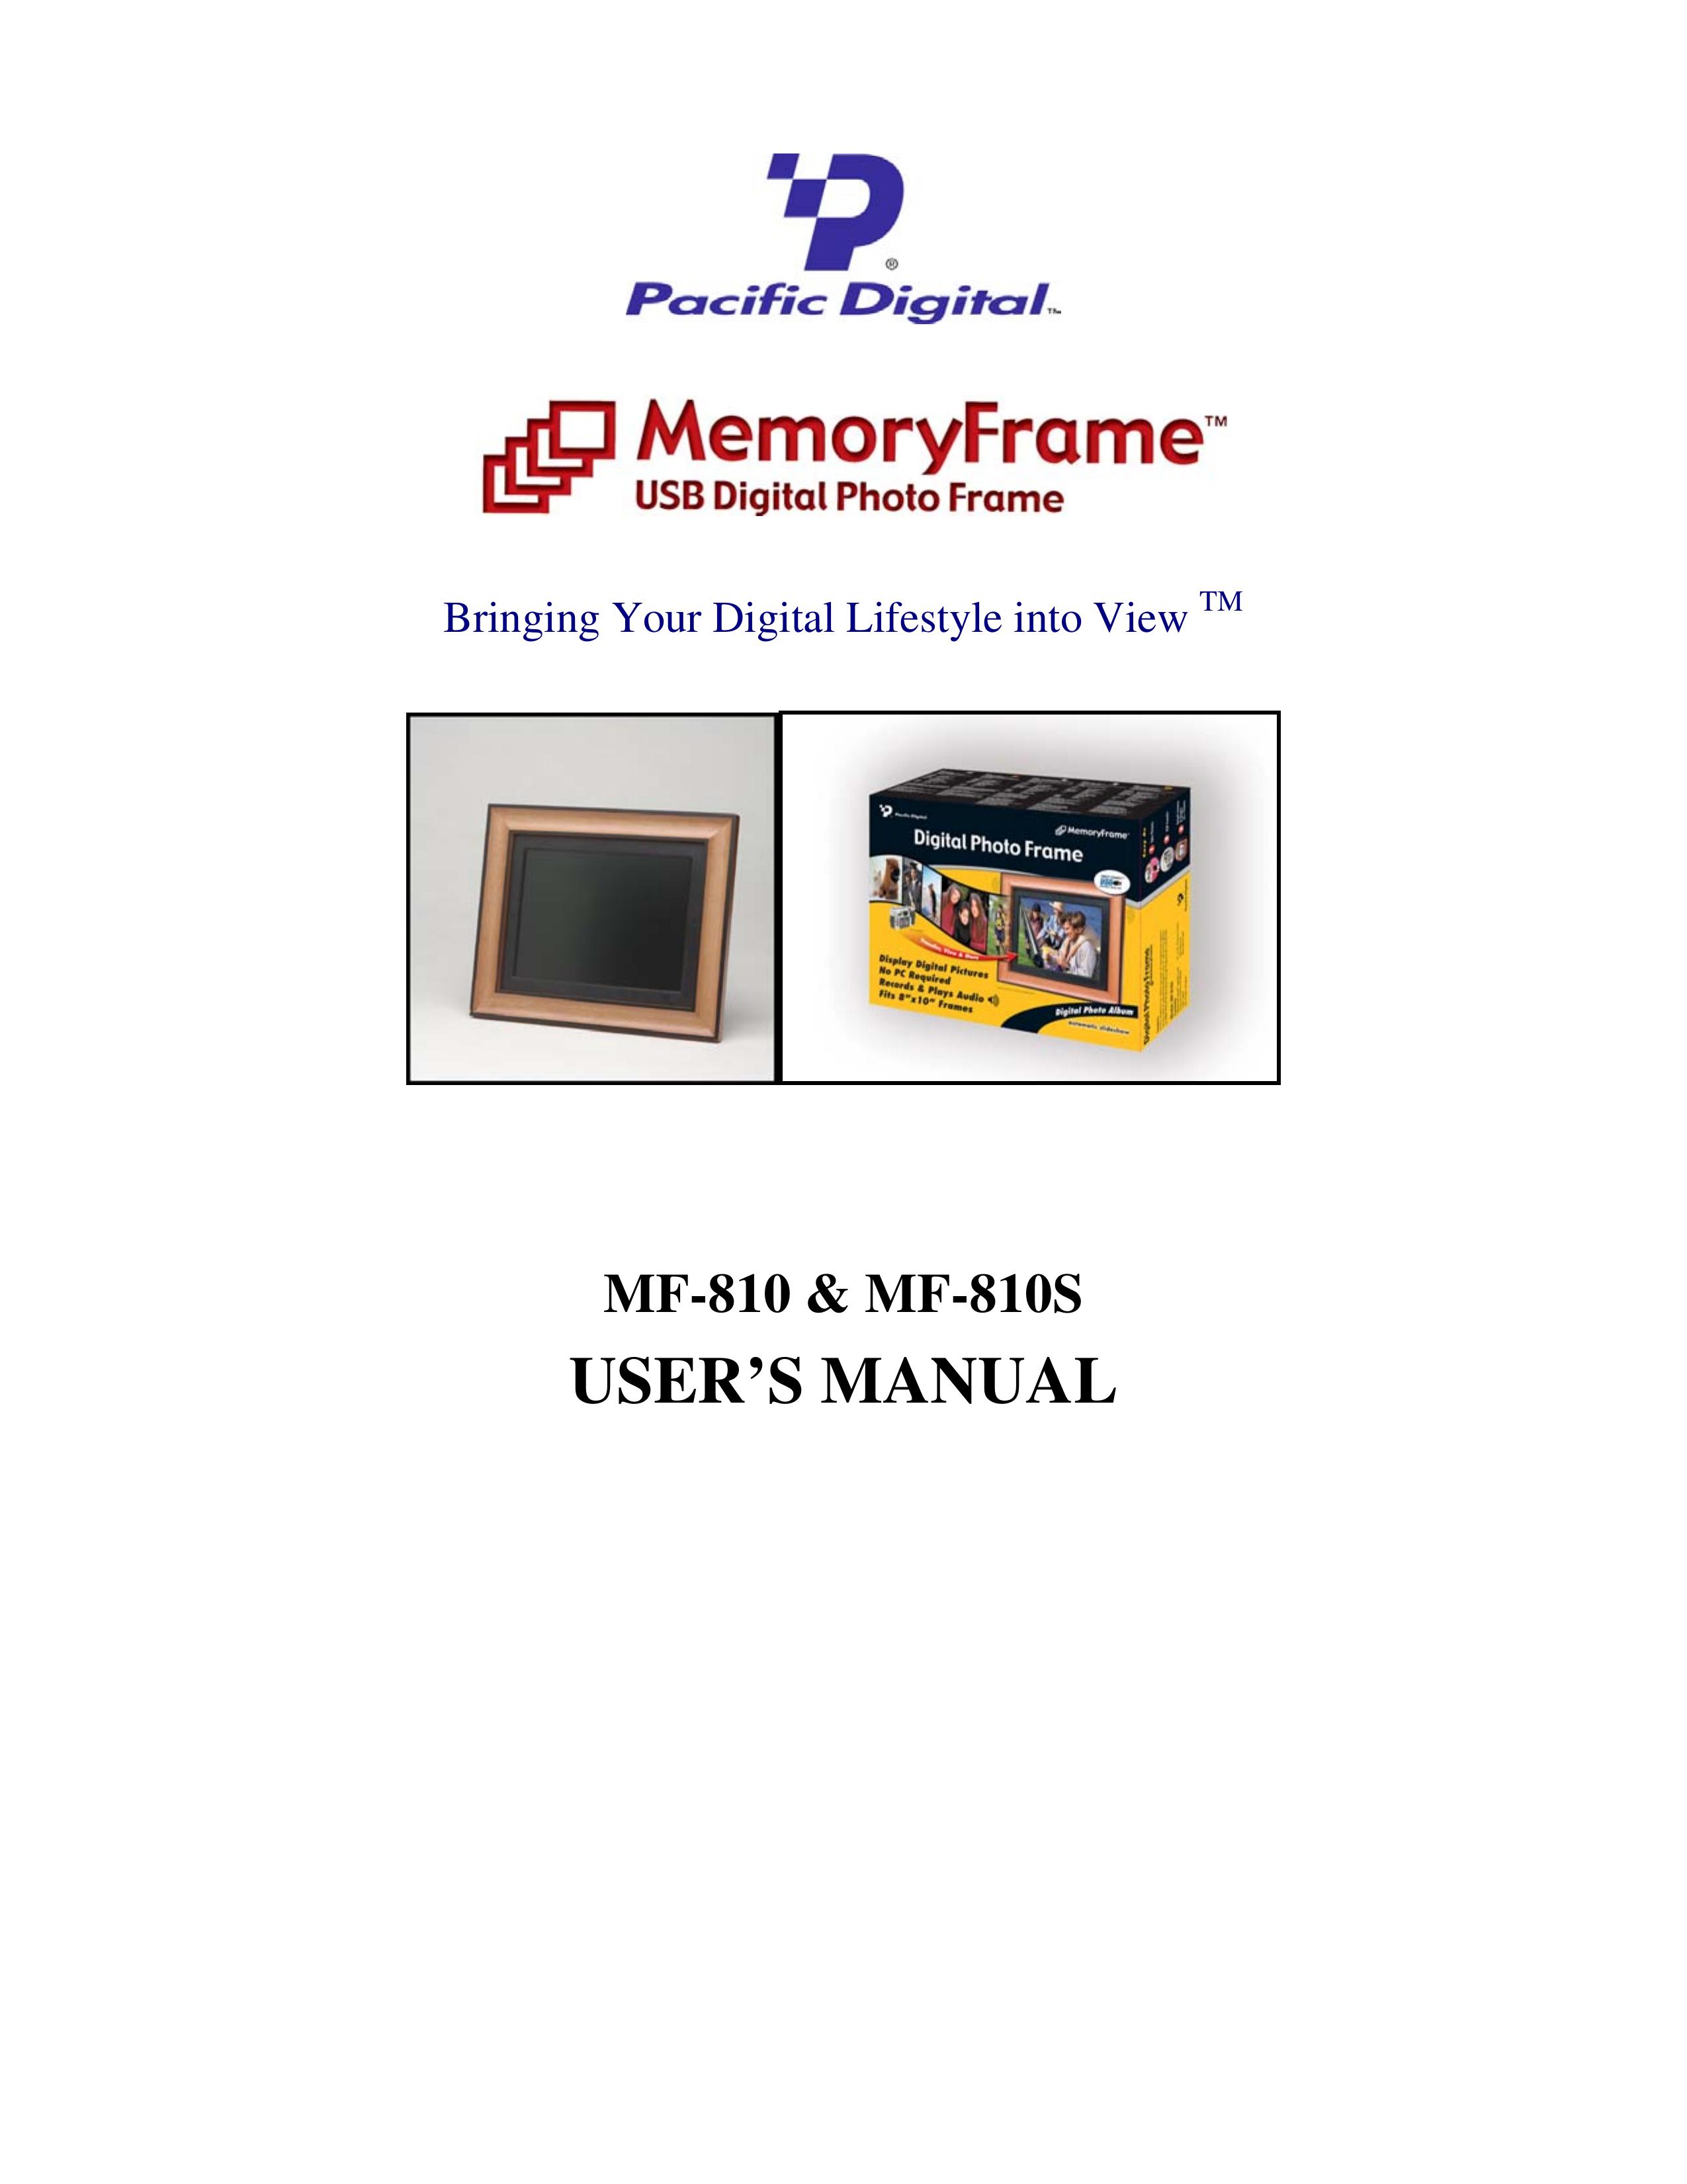 Pacific Digital MF-810S Digital Photo Frame User Manual